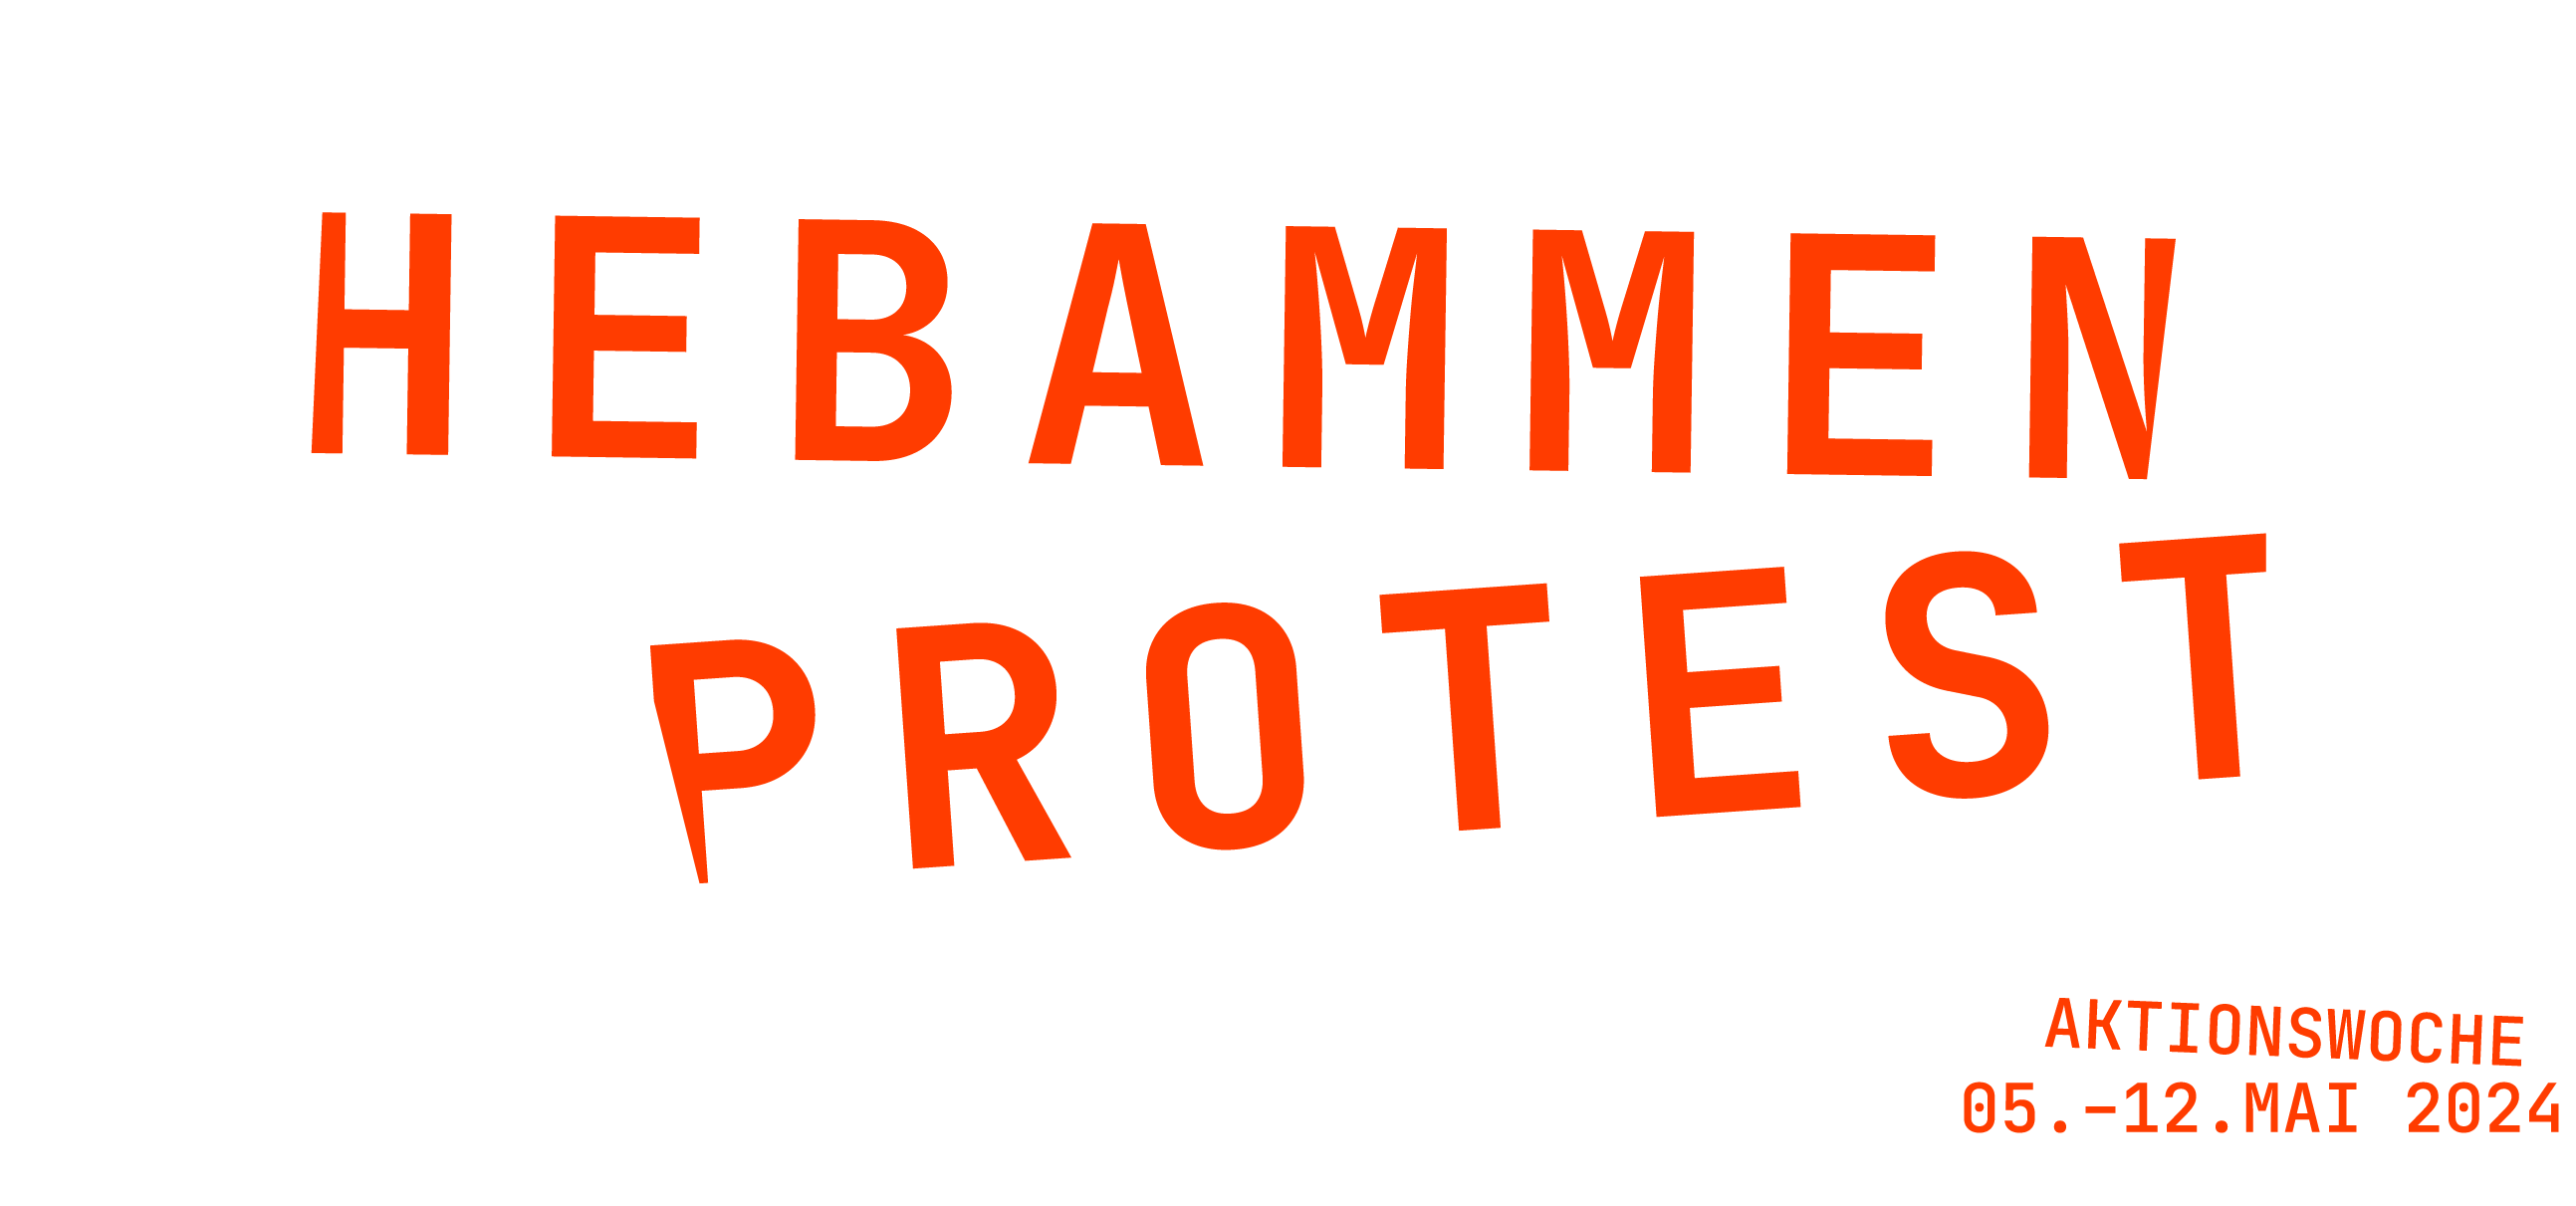 Hebammenprotest Logo mit Aktionswoche